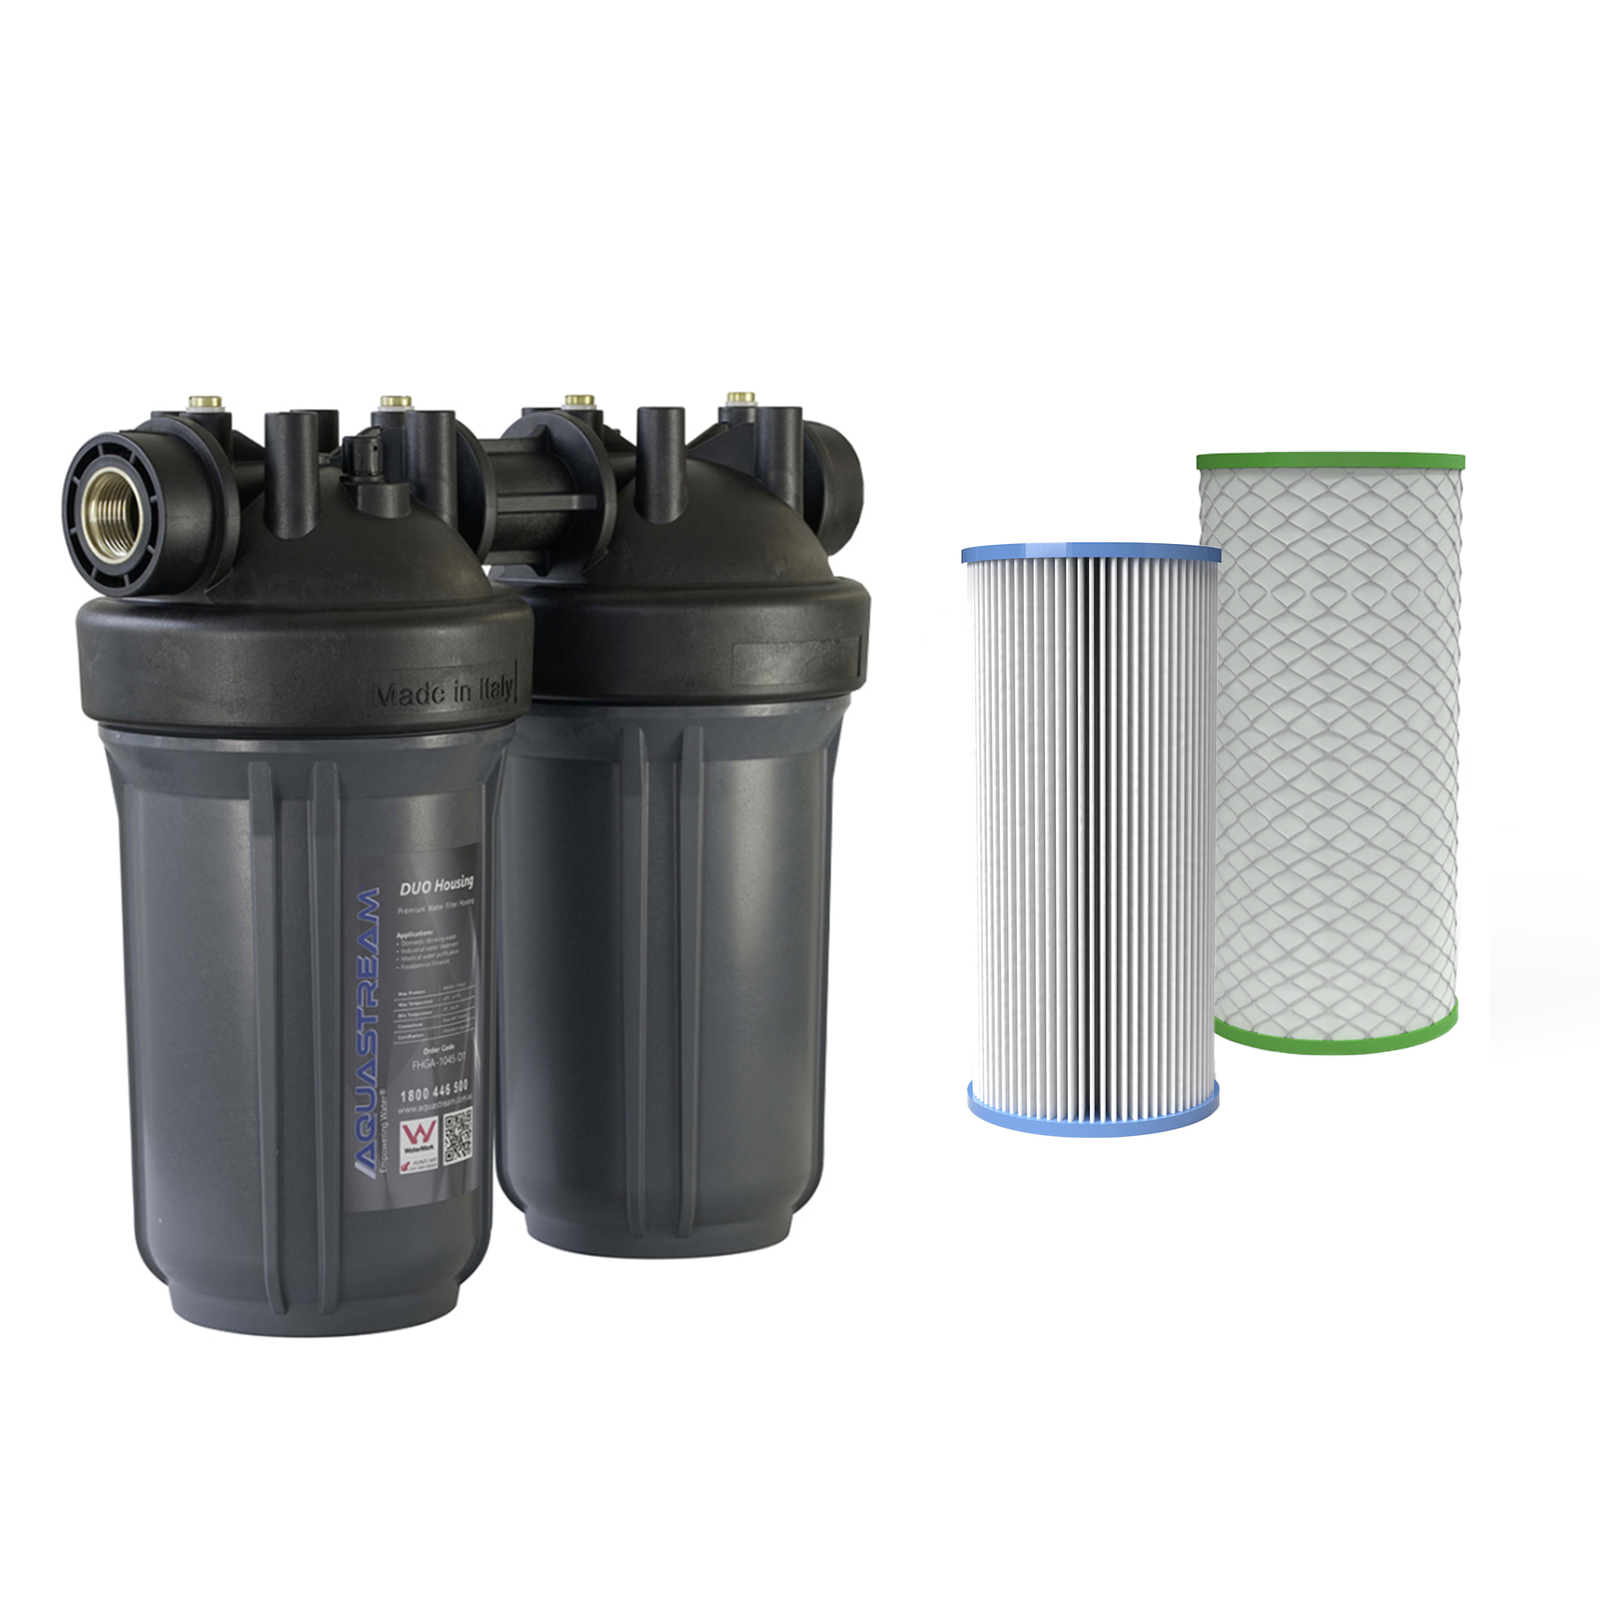 Aquastream NANO-4000 Whole House Filter System for Rainwater